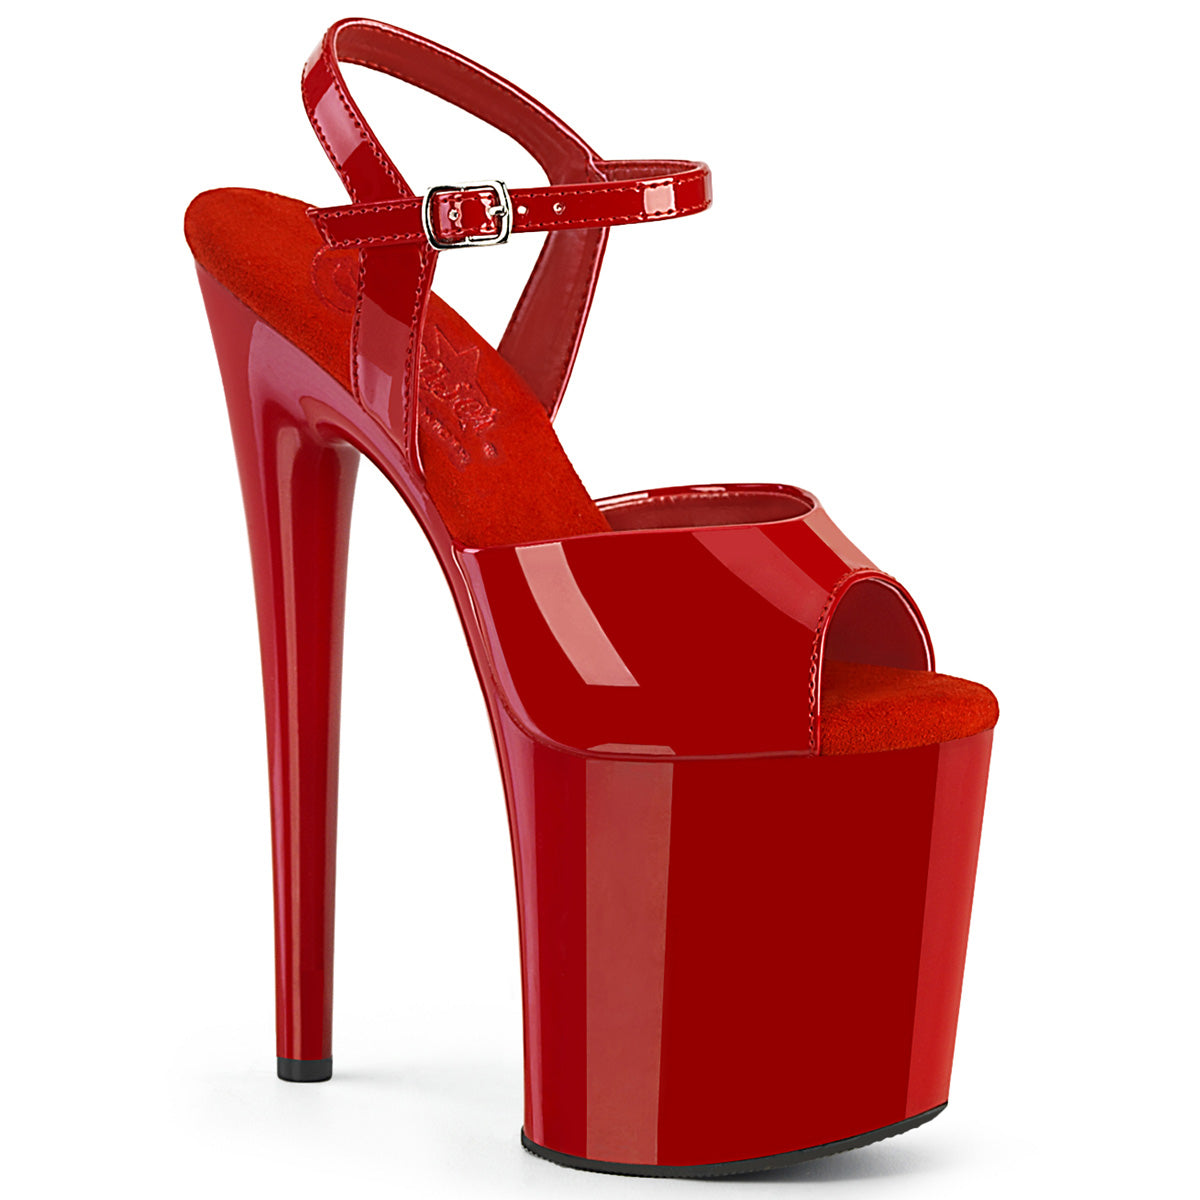 NAUGHTY-809 Red Patent Platform Sandal Pleaser